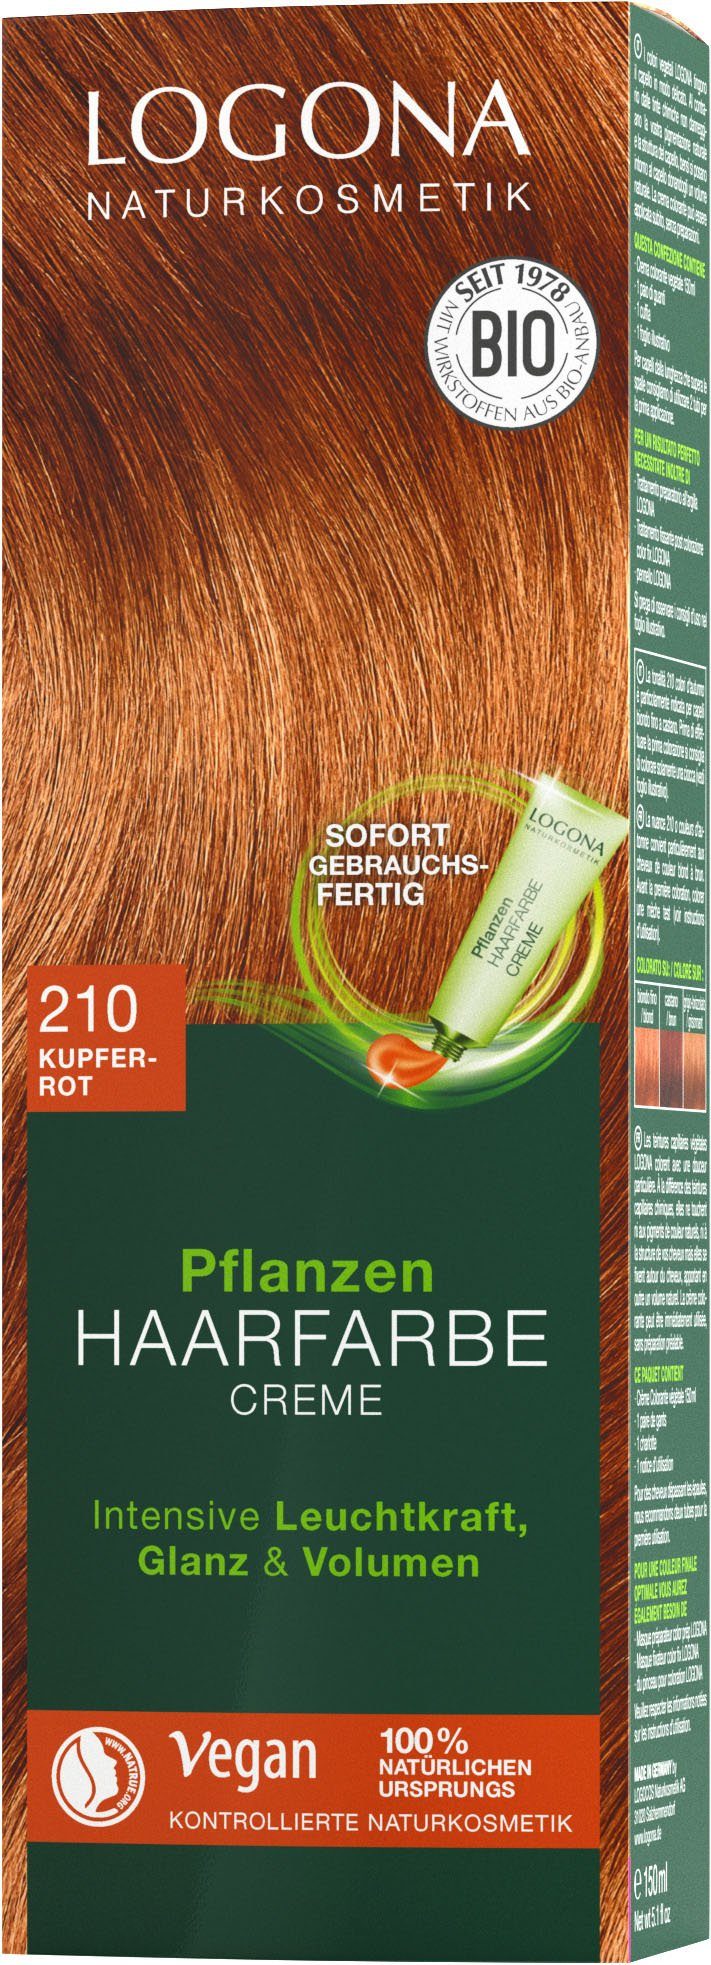 LOGONA Haarfarbe Logona Pflanzen-Haarfarbe Creme 210 kupferrot